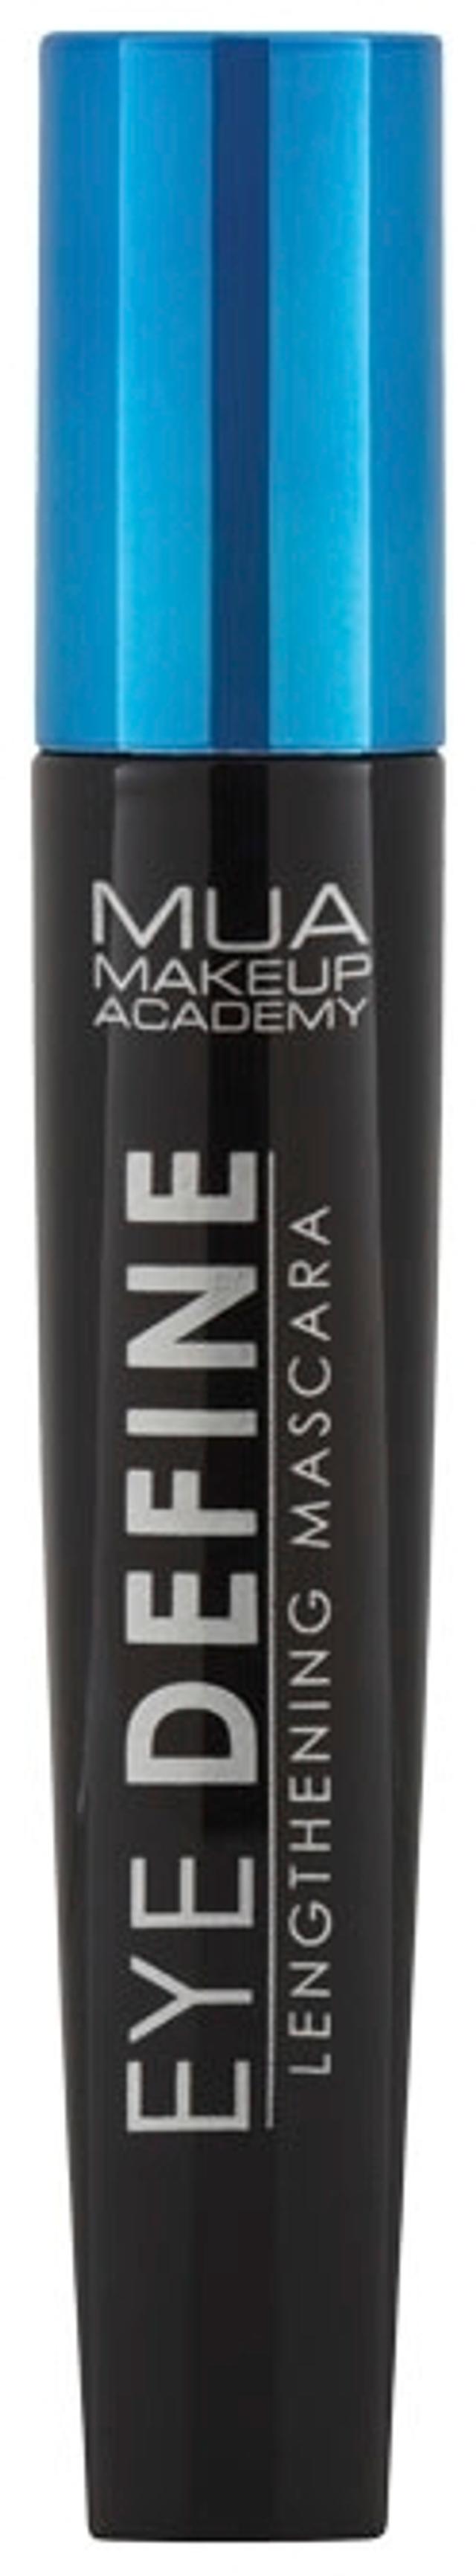 MUA Make Up Academy Eye Define Waterproof Mascara 12 ml Black ripsiväri